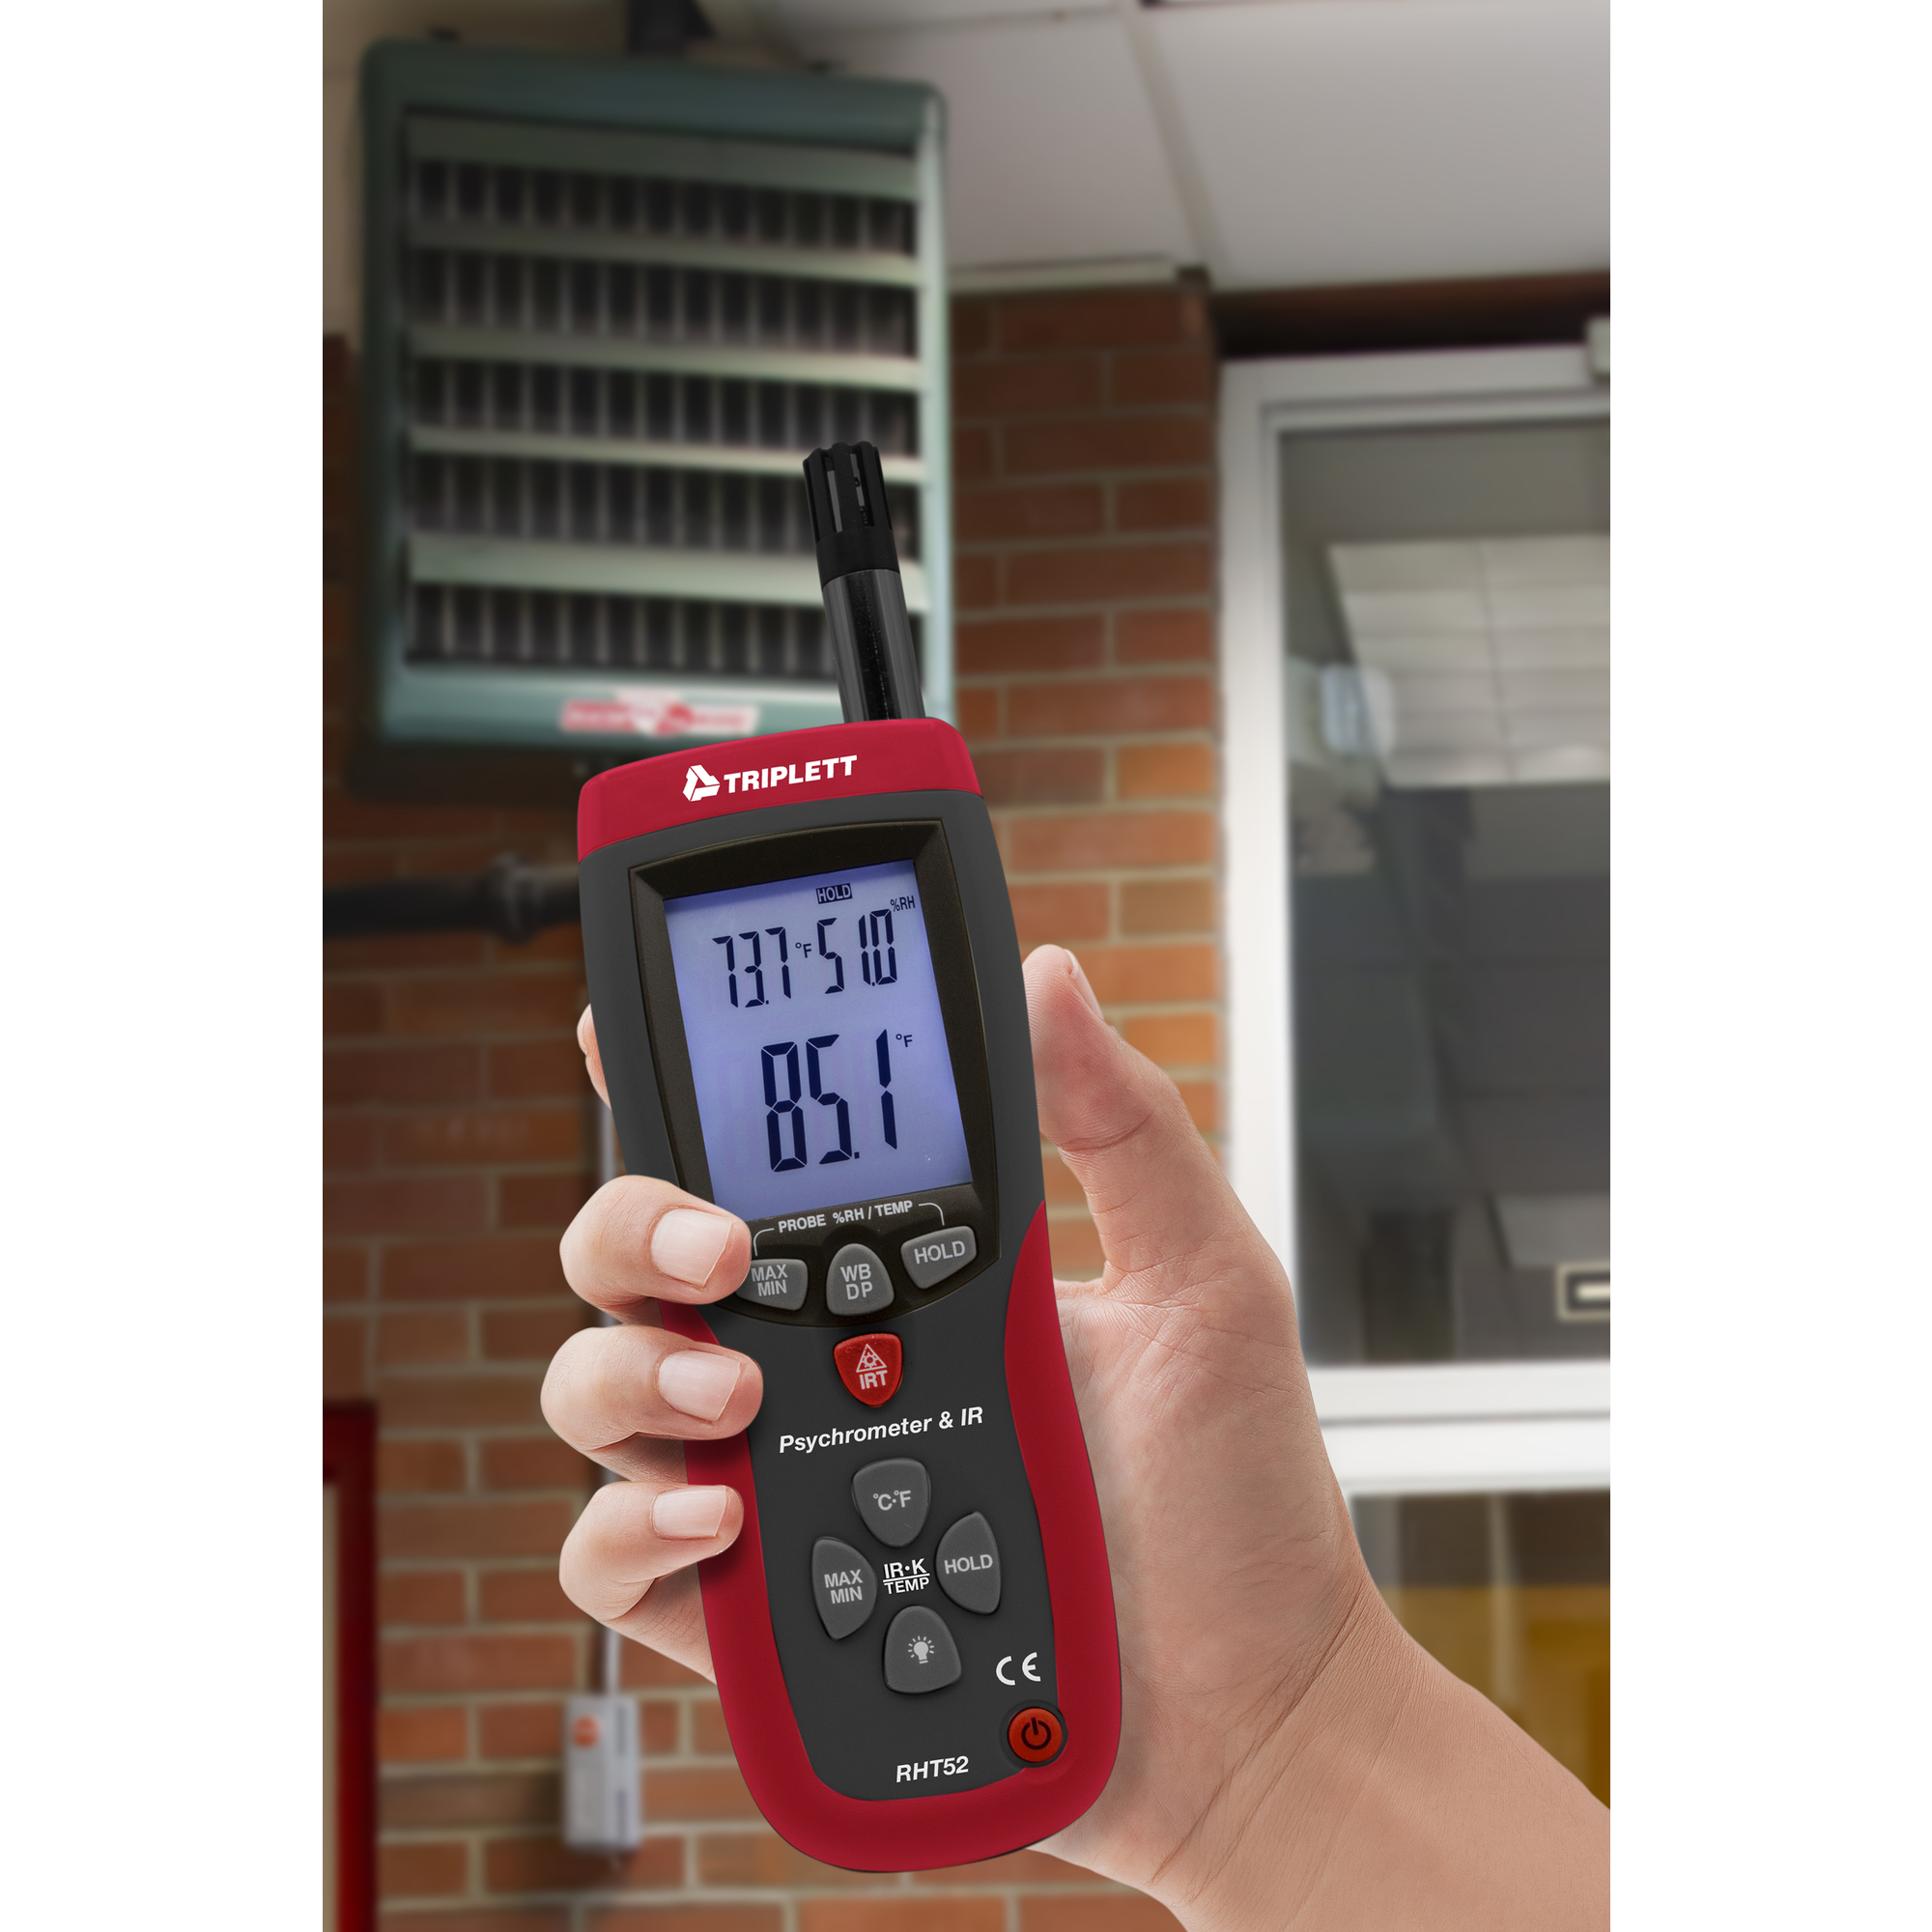 Indoor/Outdoor Thermometer (TM020) — Triplett Test Equipment & Tools